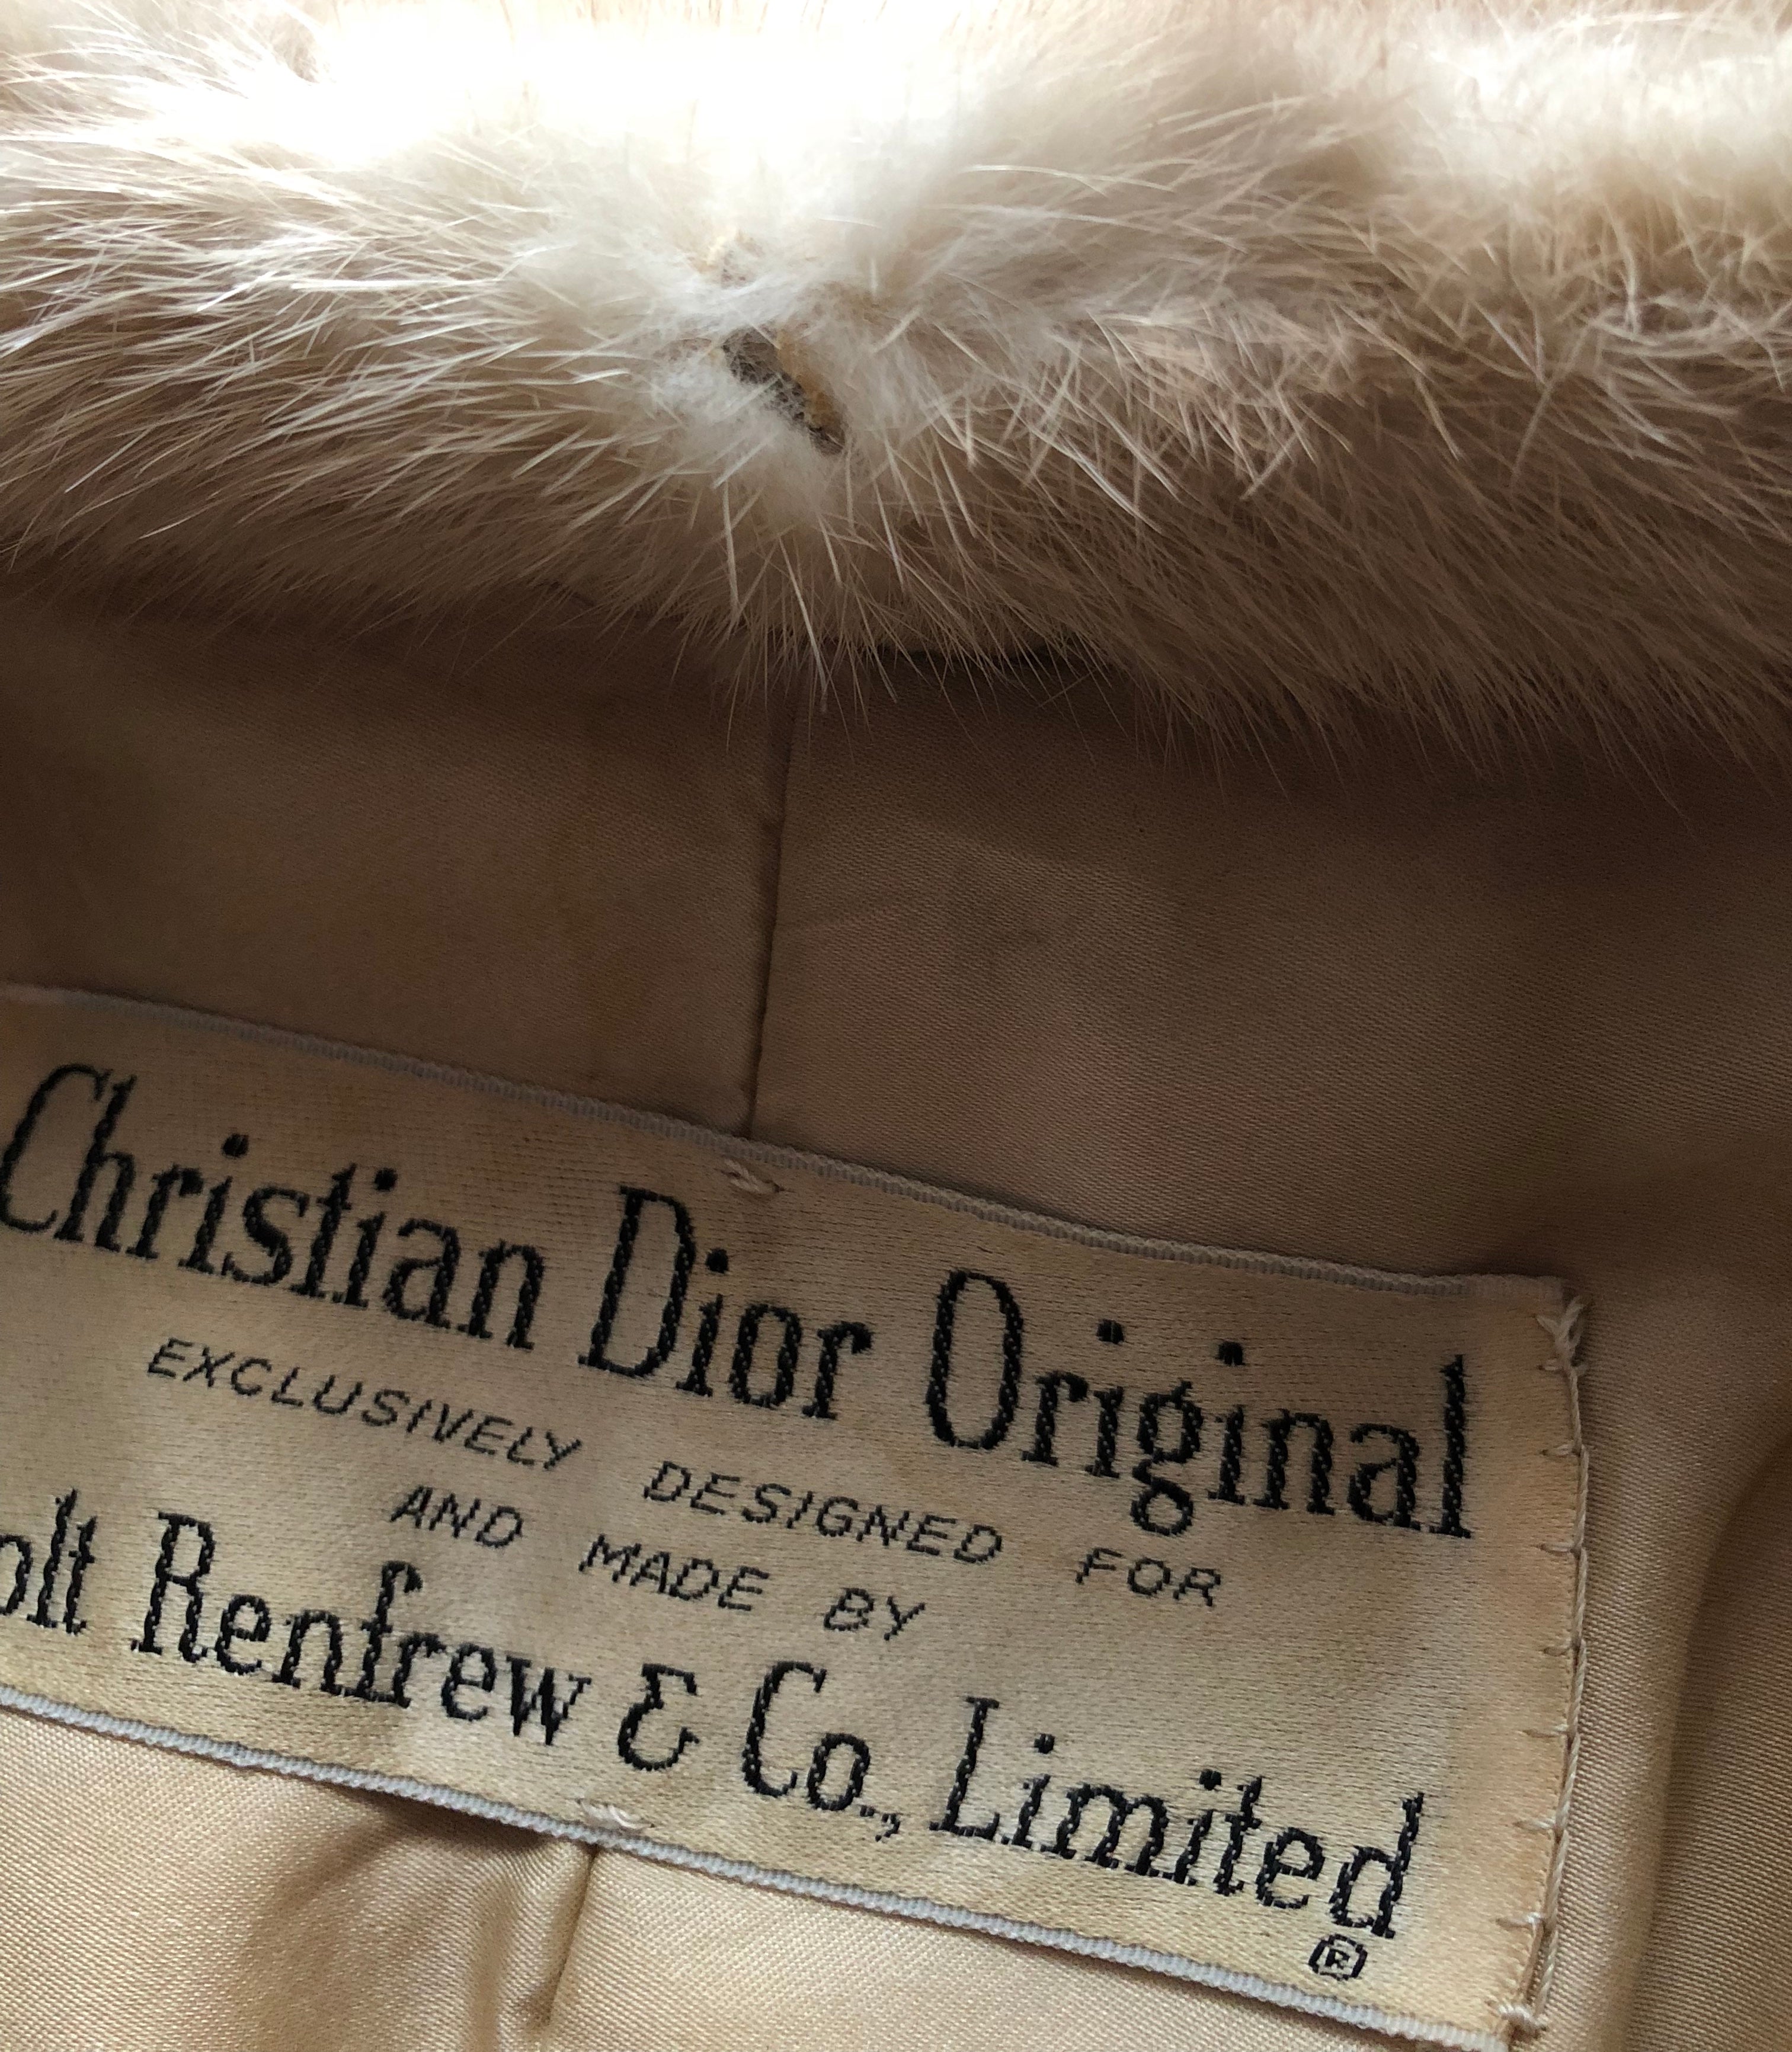 1960s Genuine Blonde Mink Fur Coat